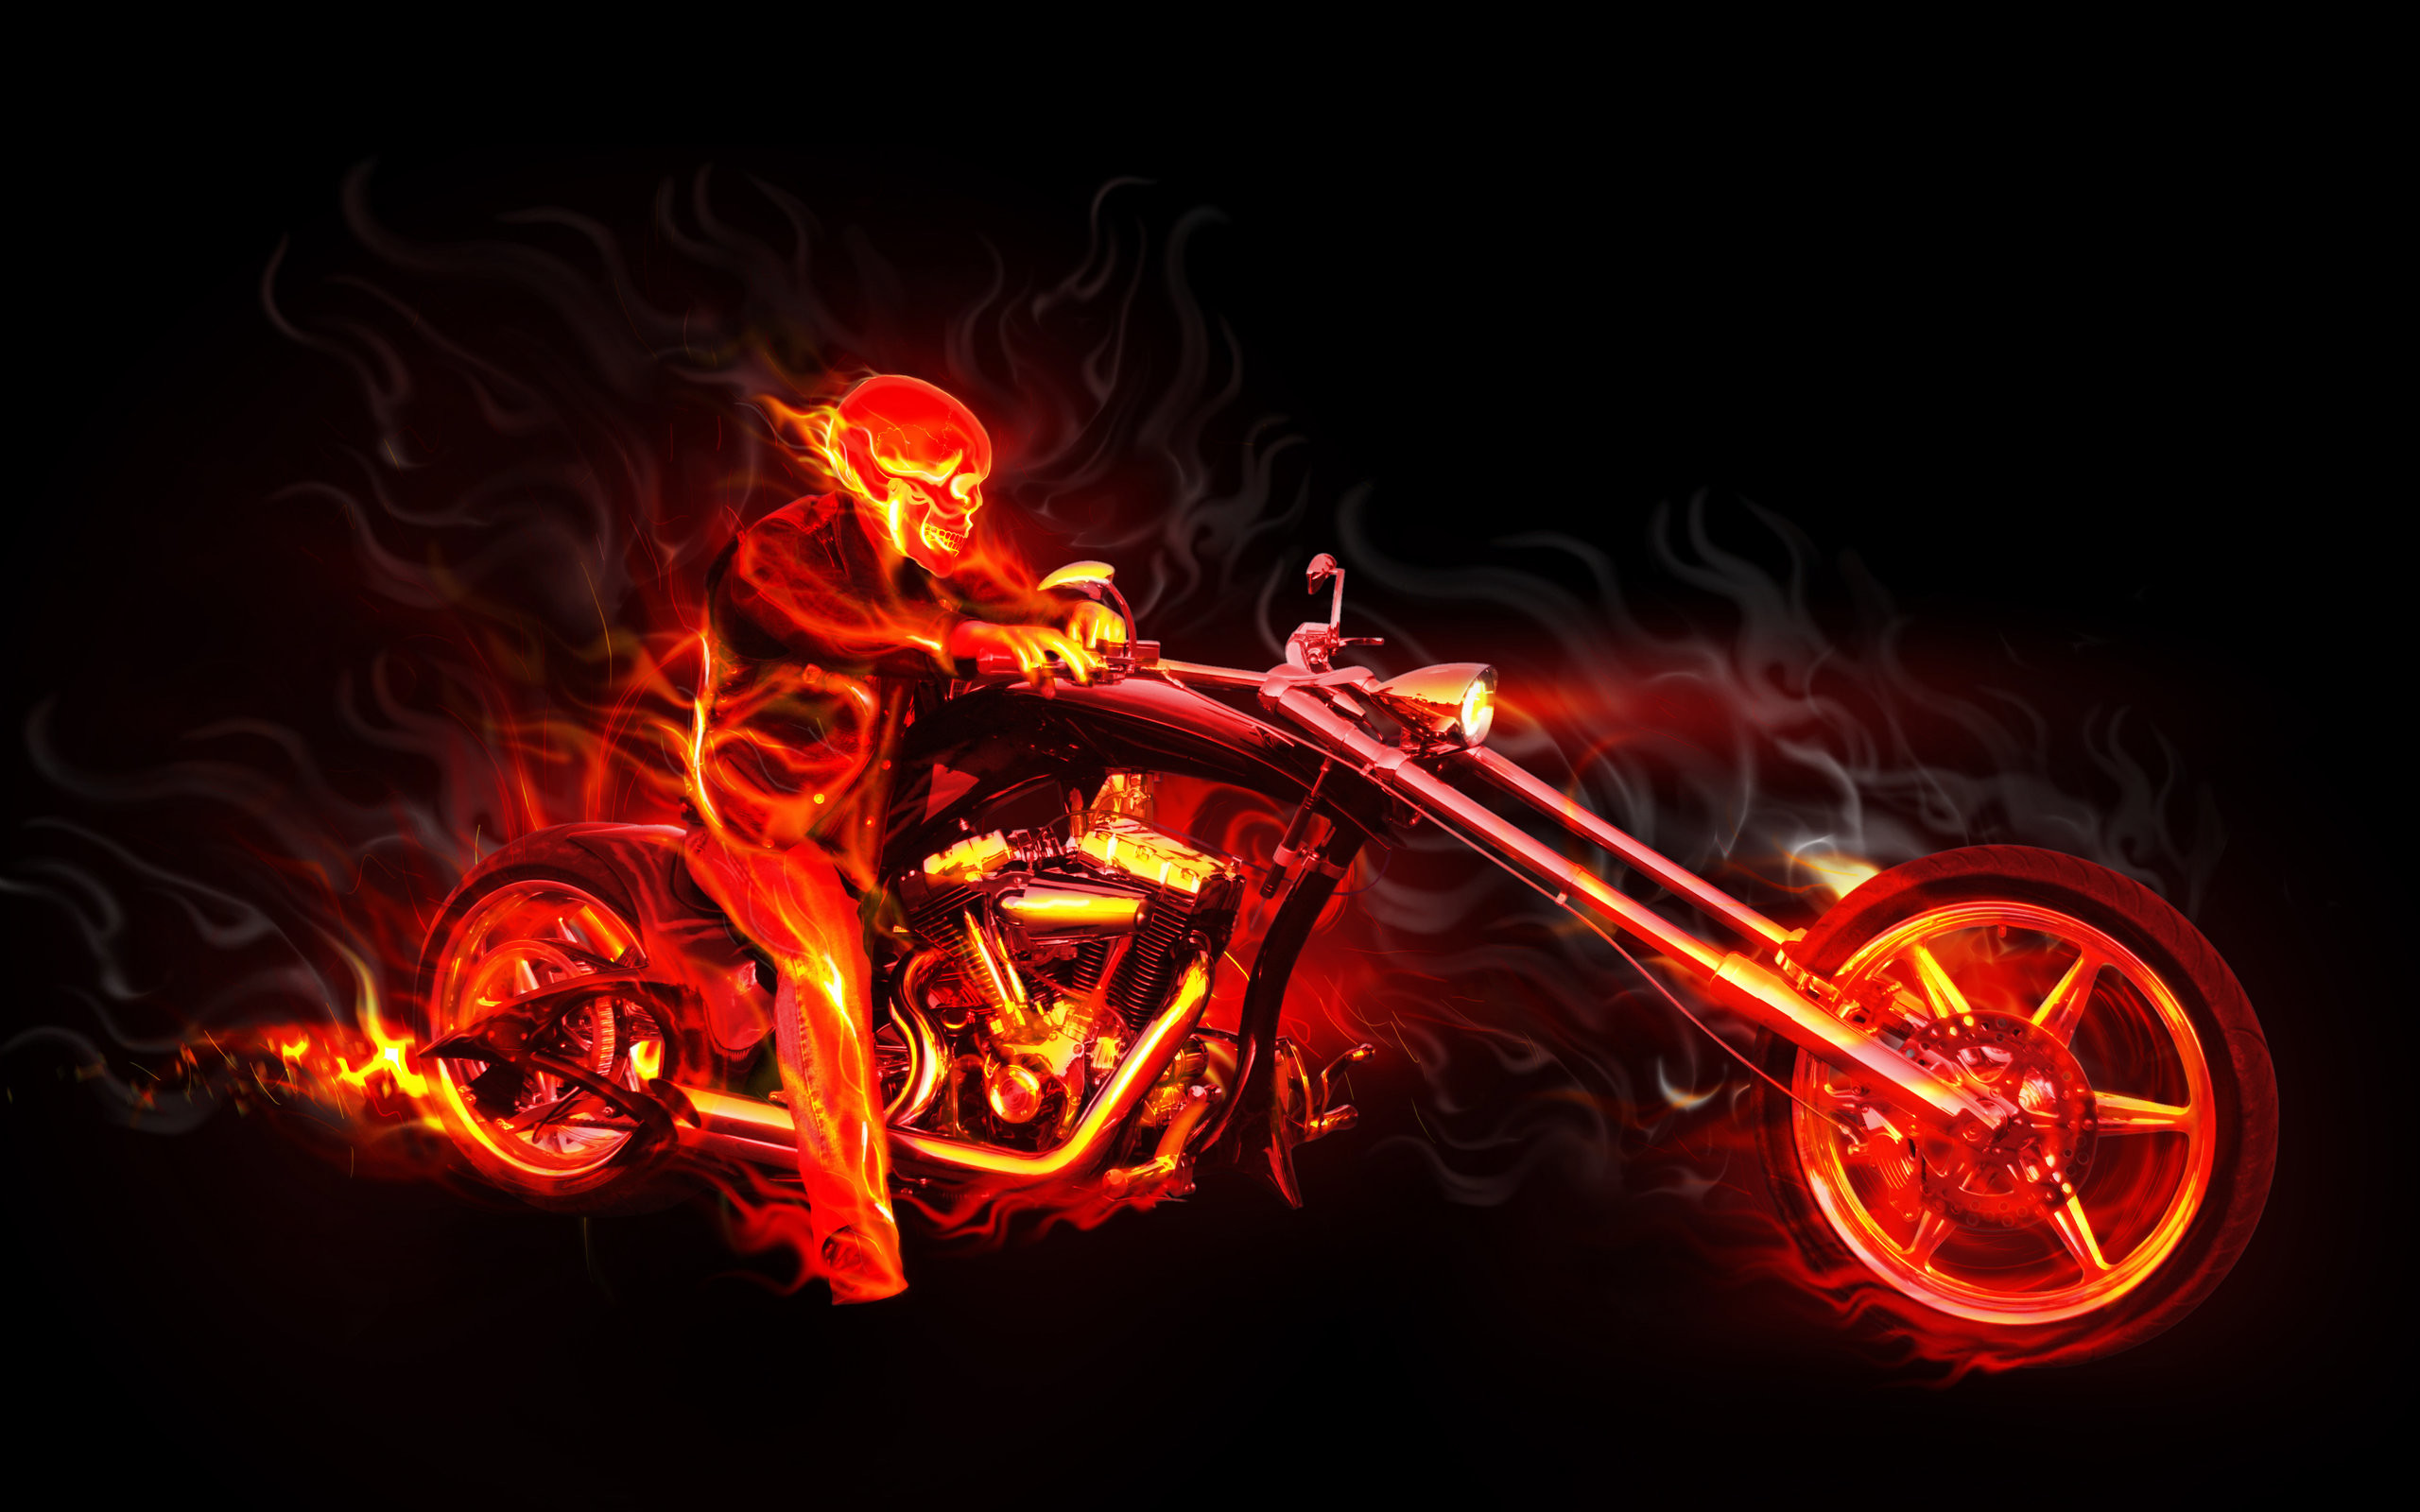 2560x1600 Image detail for -motorcycle skull flames fantasy bike wallpaper hd desktop  wallpapers .